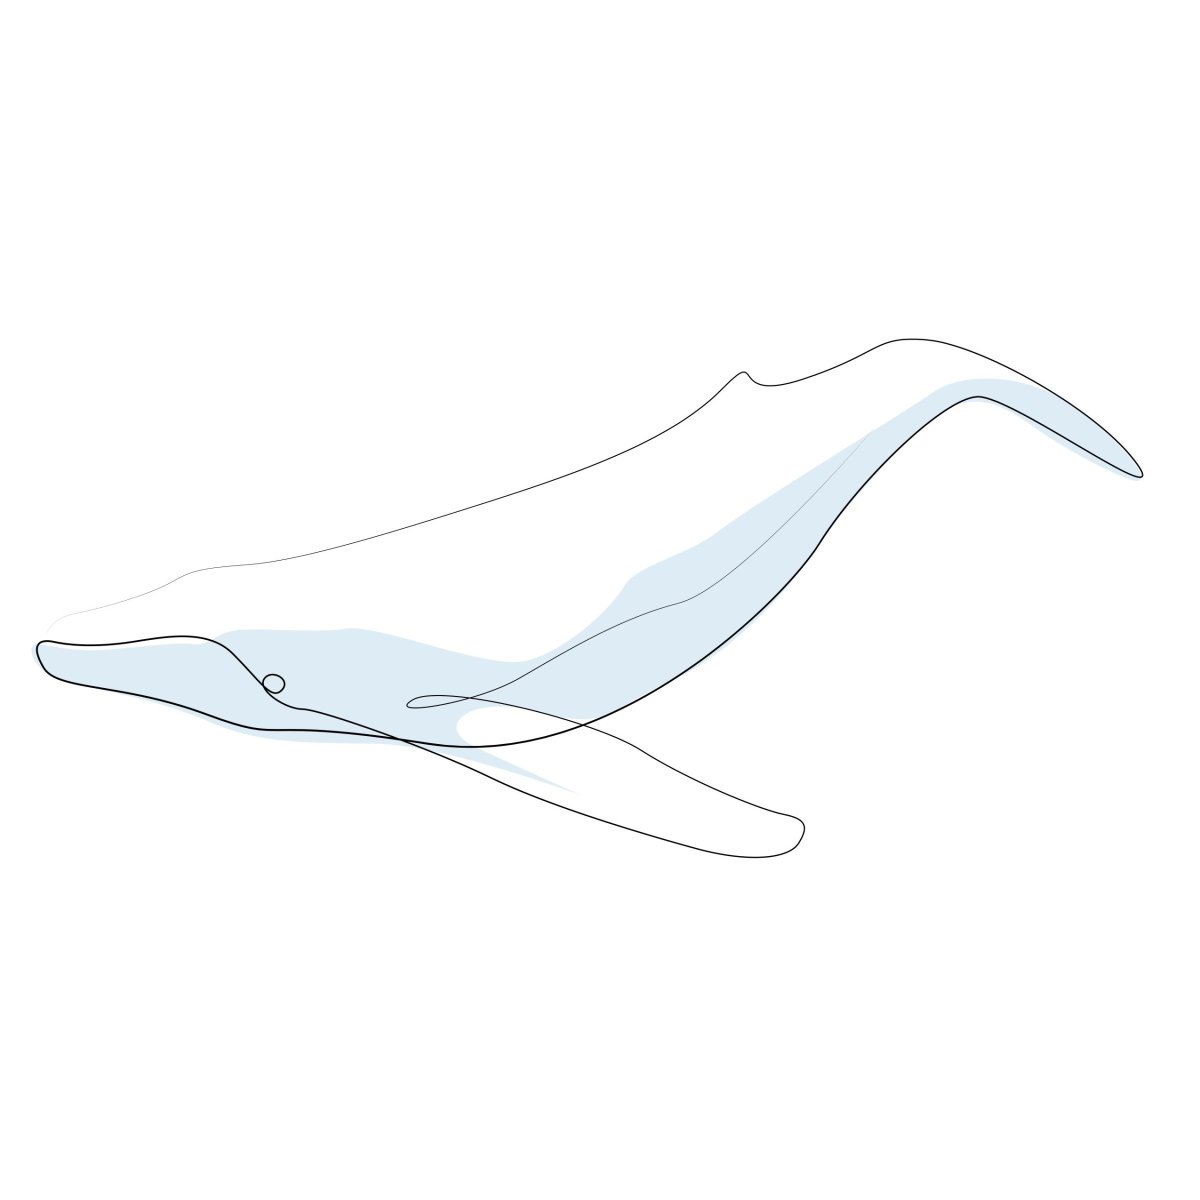 Синий кит рисунок карандашом